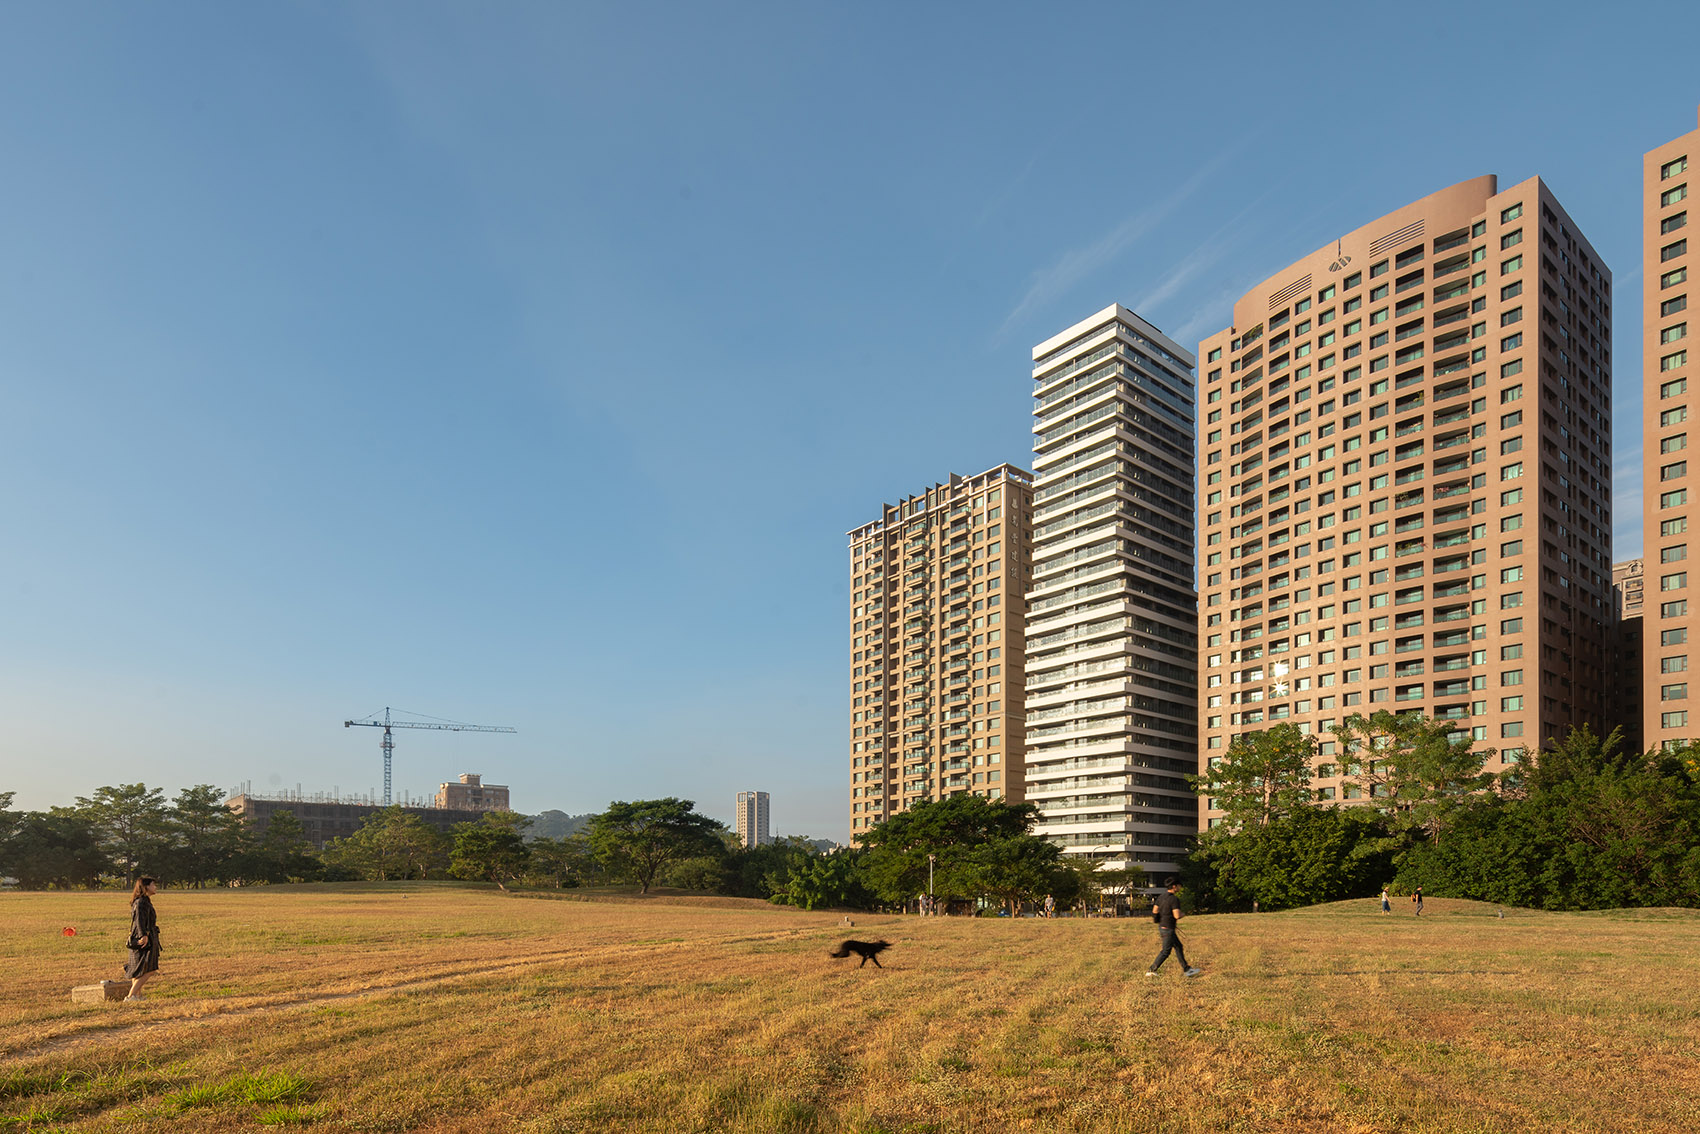 One More住宅楼，台湾/城市环境中的自然生活-6